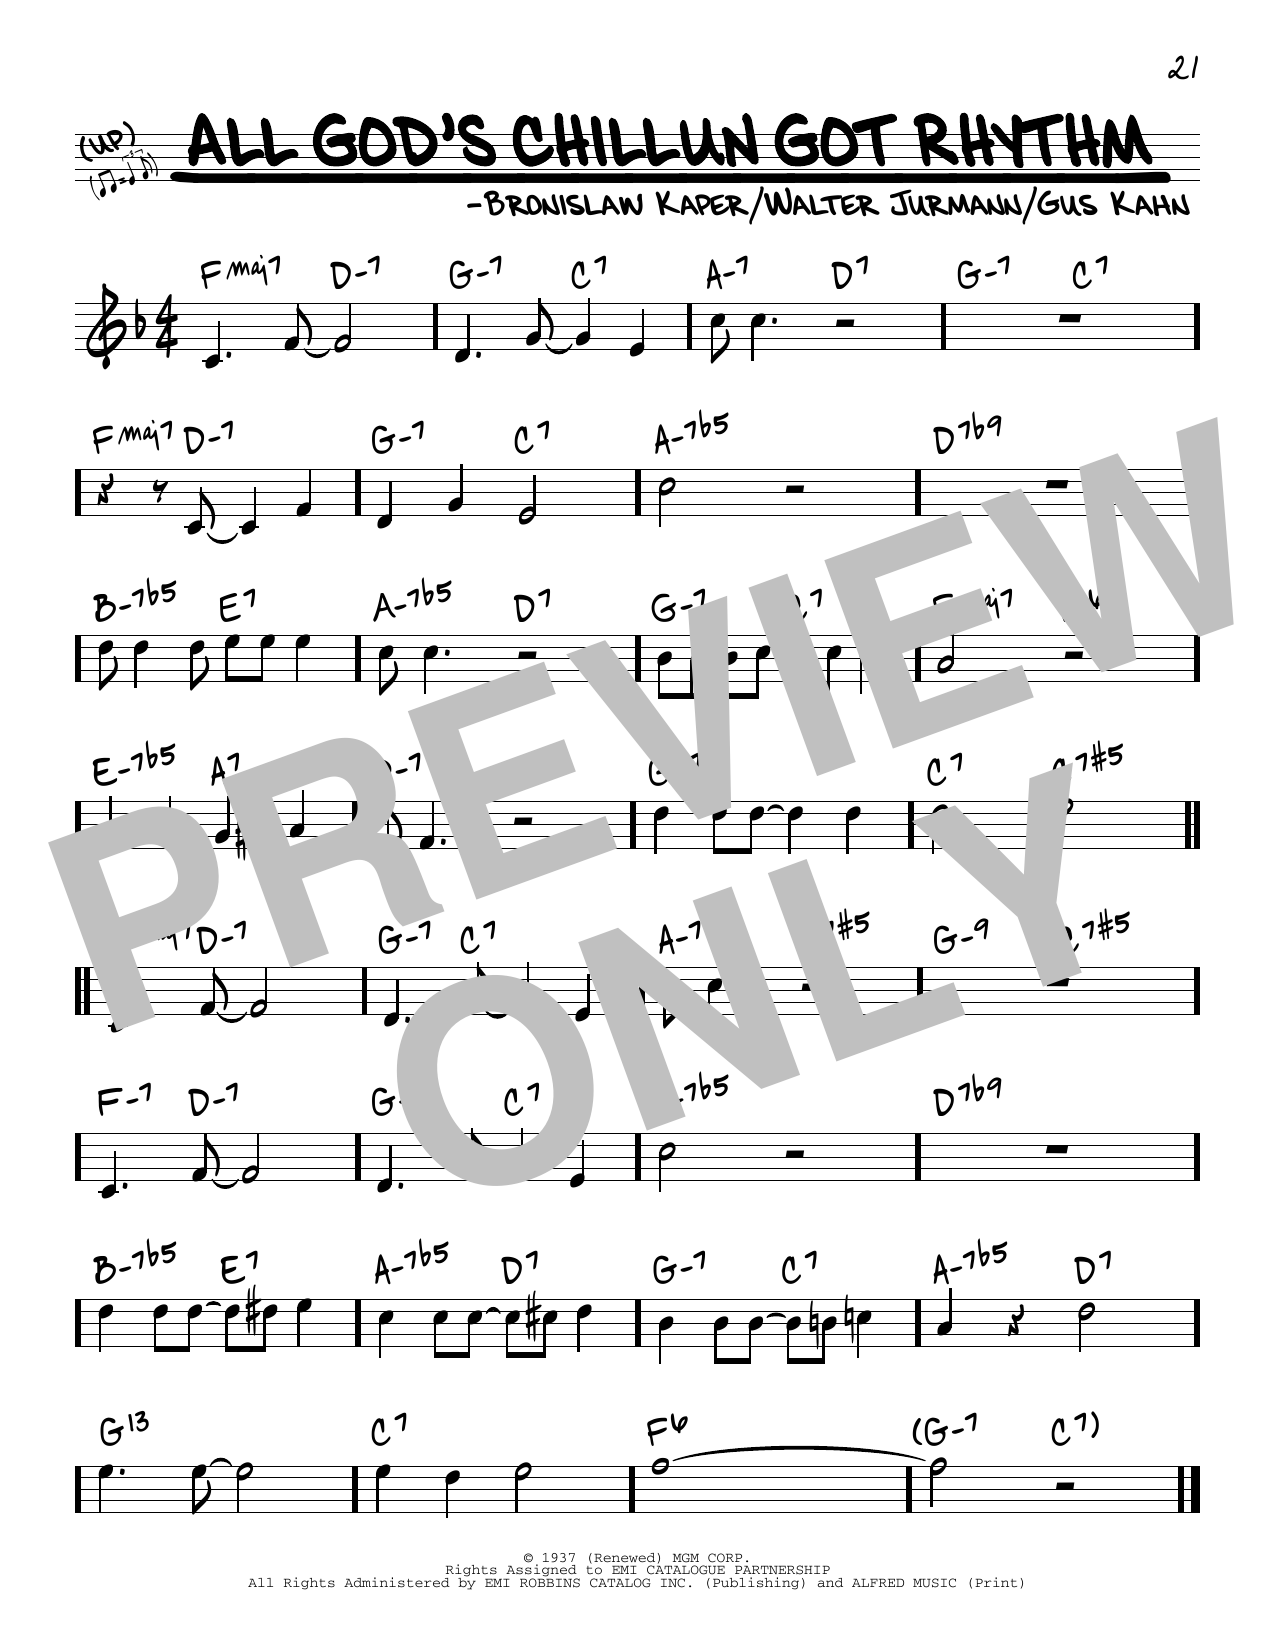 Bronislaw Kaper, Walter Jurmann and Gus Kahn All God's Chillun Got Rhythm Sheet Music Notes & Chords for Real Book – Melody & Chords - Download or Print PDF